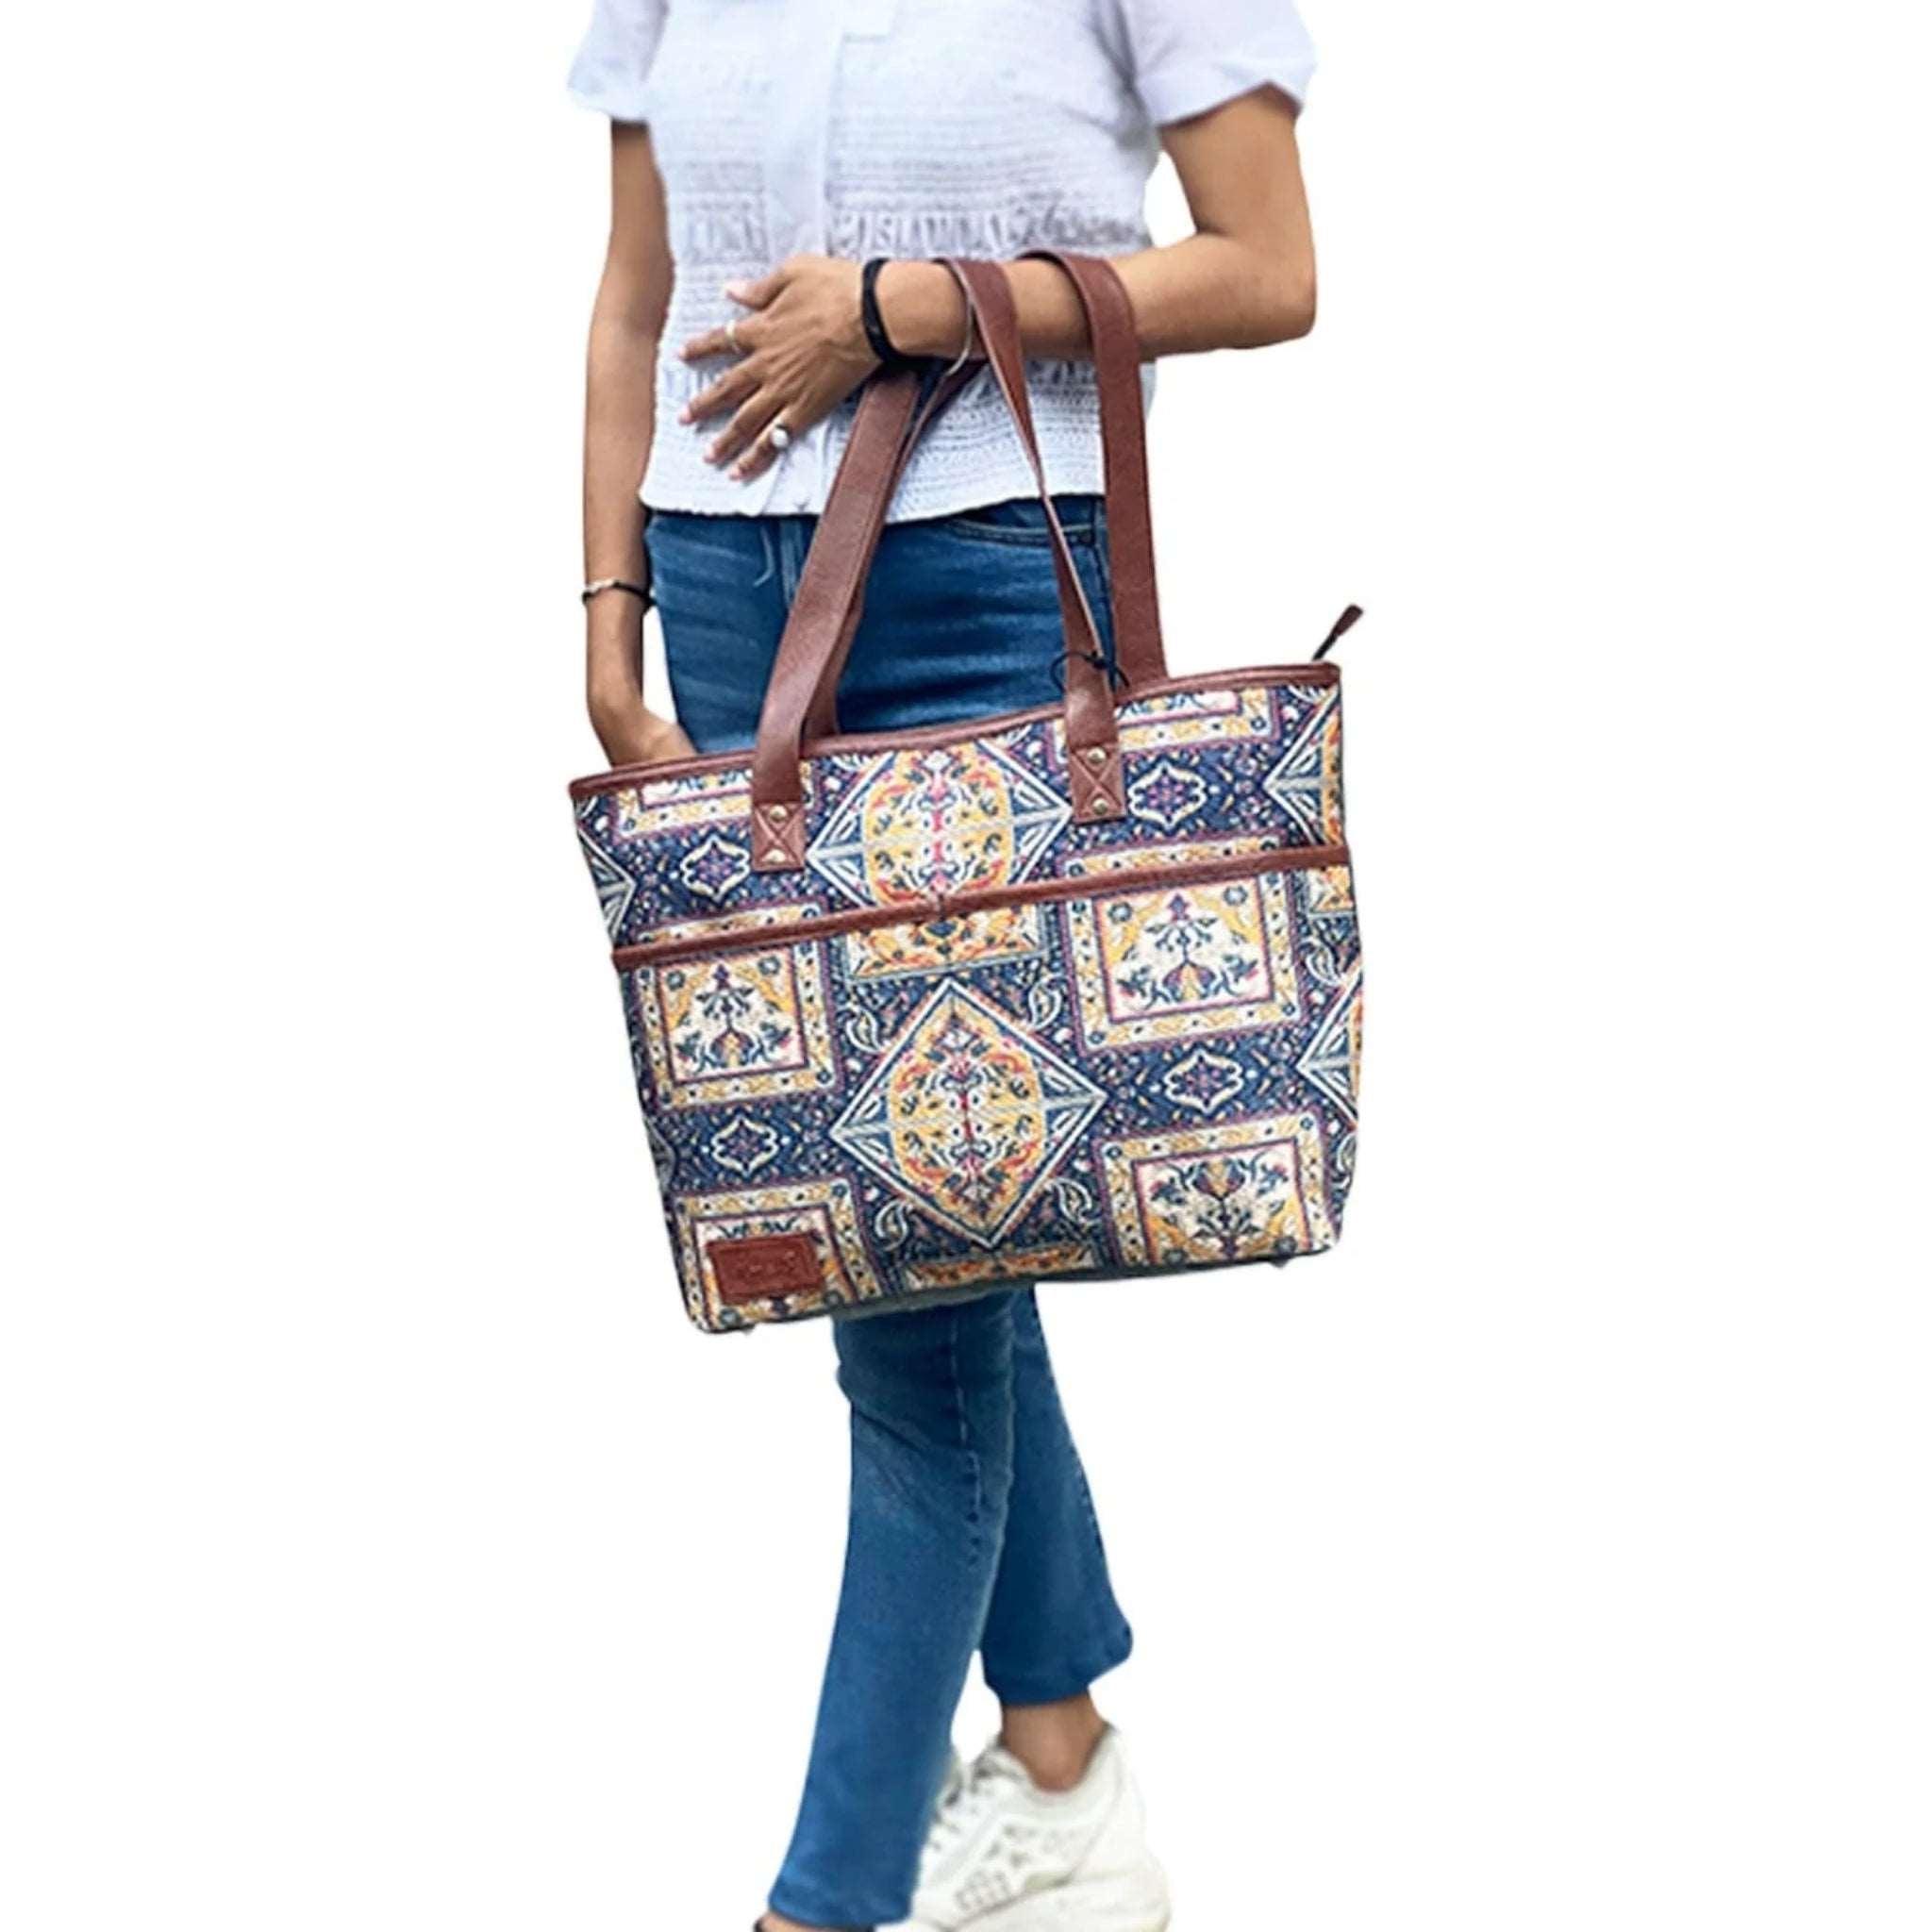 Mona B Canvas Large Vintage Handbag, Shoulder Bag, Zipper Tote Bag for Shopping, Travel with Stylish Design For Women (Chocolate, Kilim) - (M-7005)